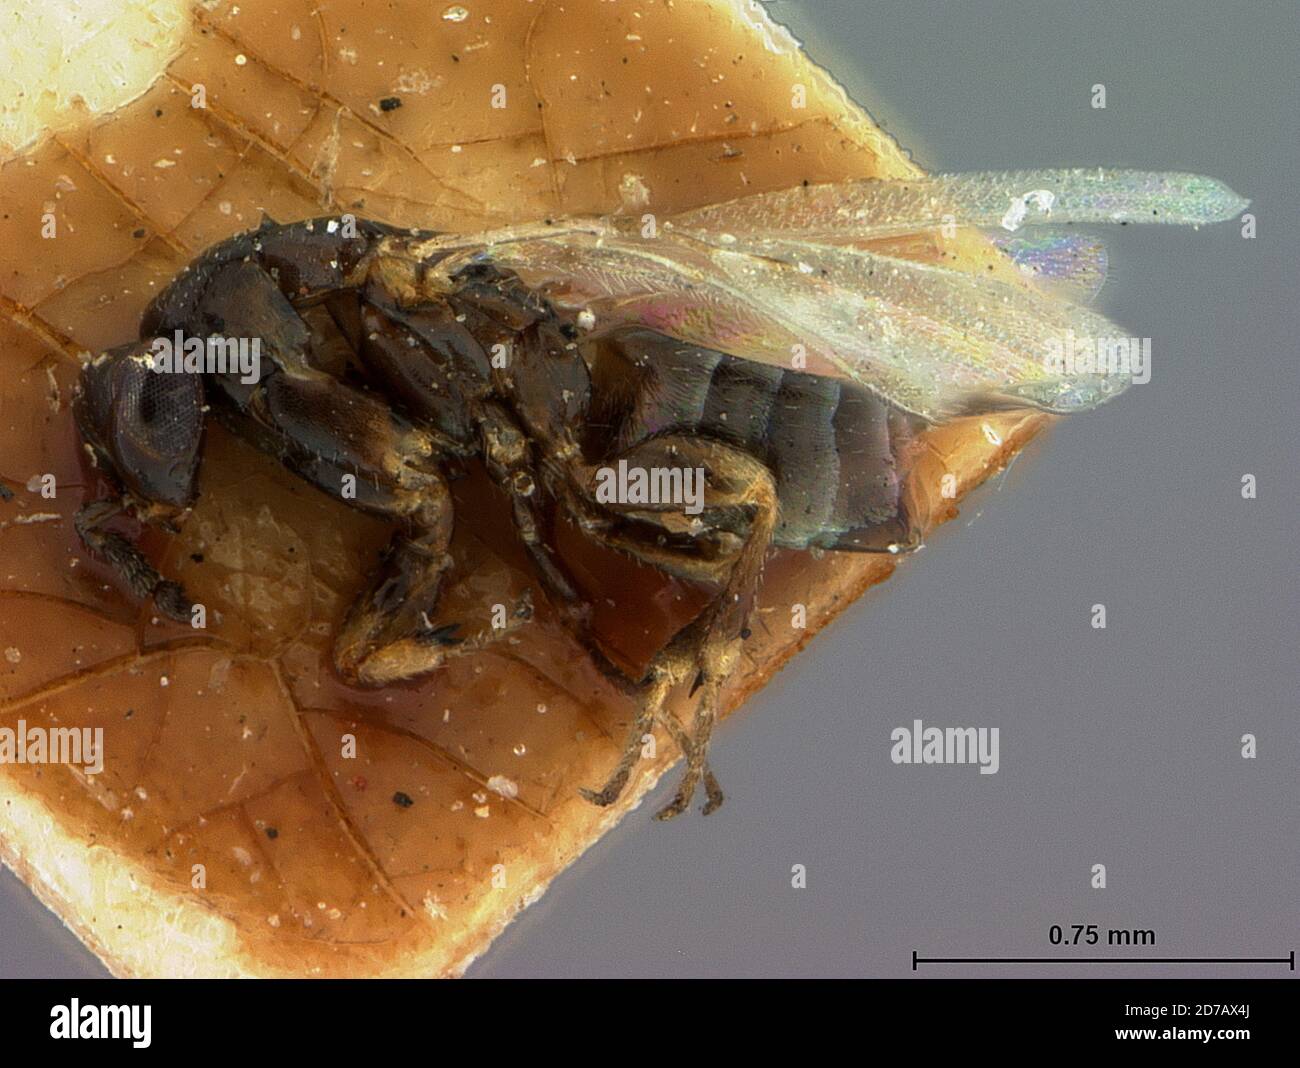 Ottawa, Ontario, Canada, Crataepus fletcherii Ashmead, 1892, Animalia, Arthropoda, Insecta, Hymenoptera, Eulophidae Stock Photo